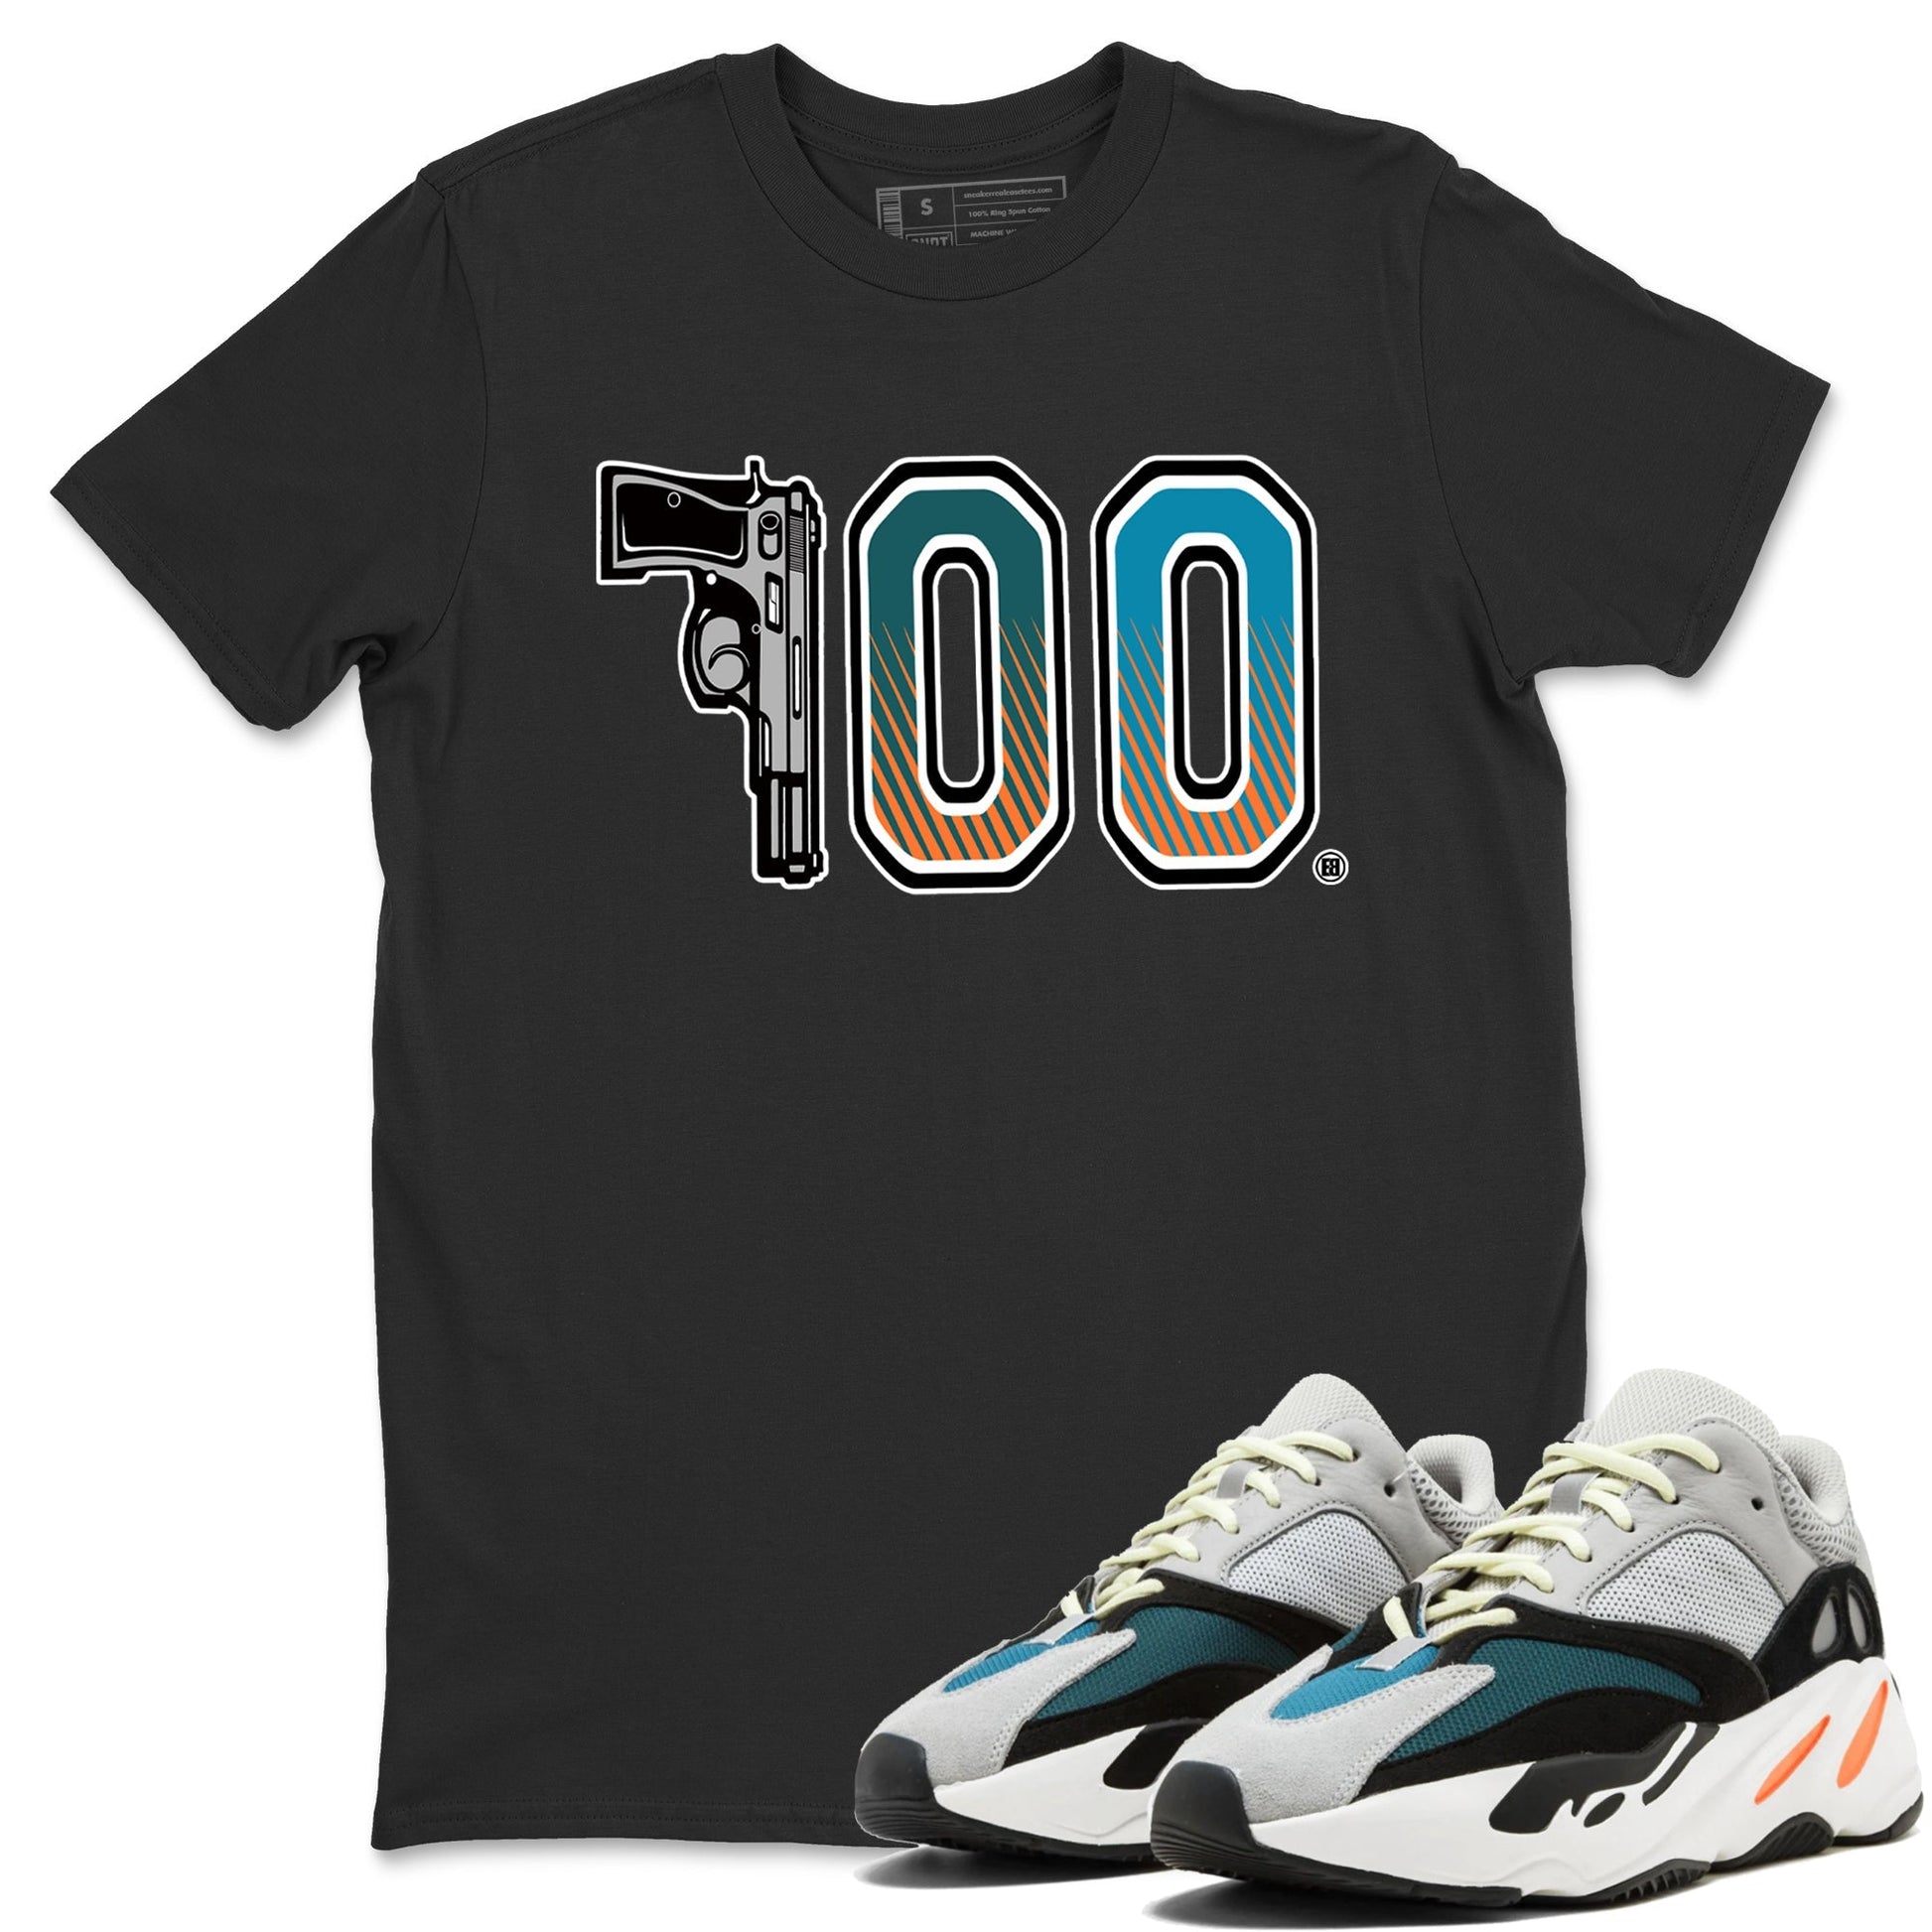 Yeezy 700 Wave Runner Sneaker Match Tees Number 700 Sneaker Tees Yeezy 700 Wave Runner Sneaker Release Tees Unisex Shirts